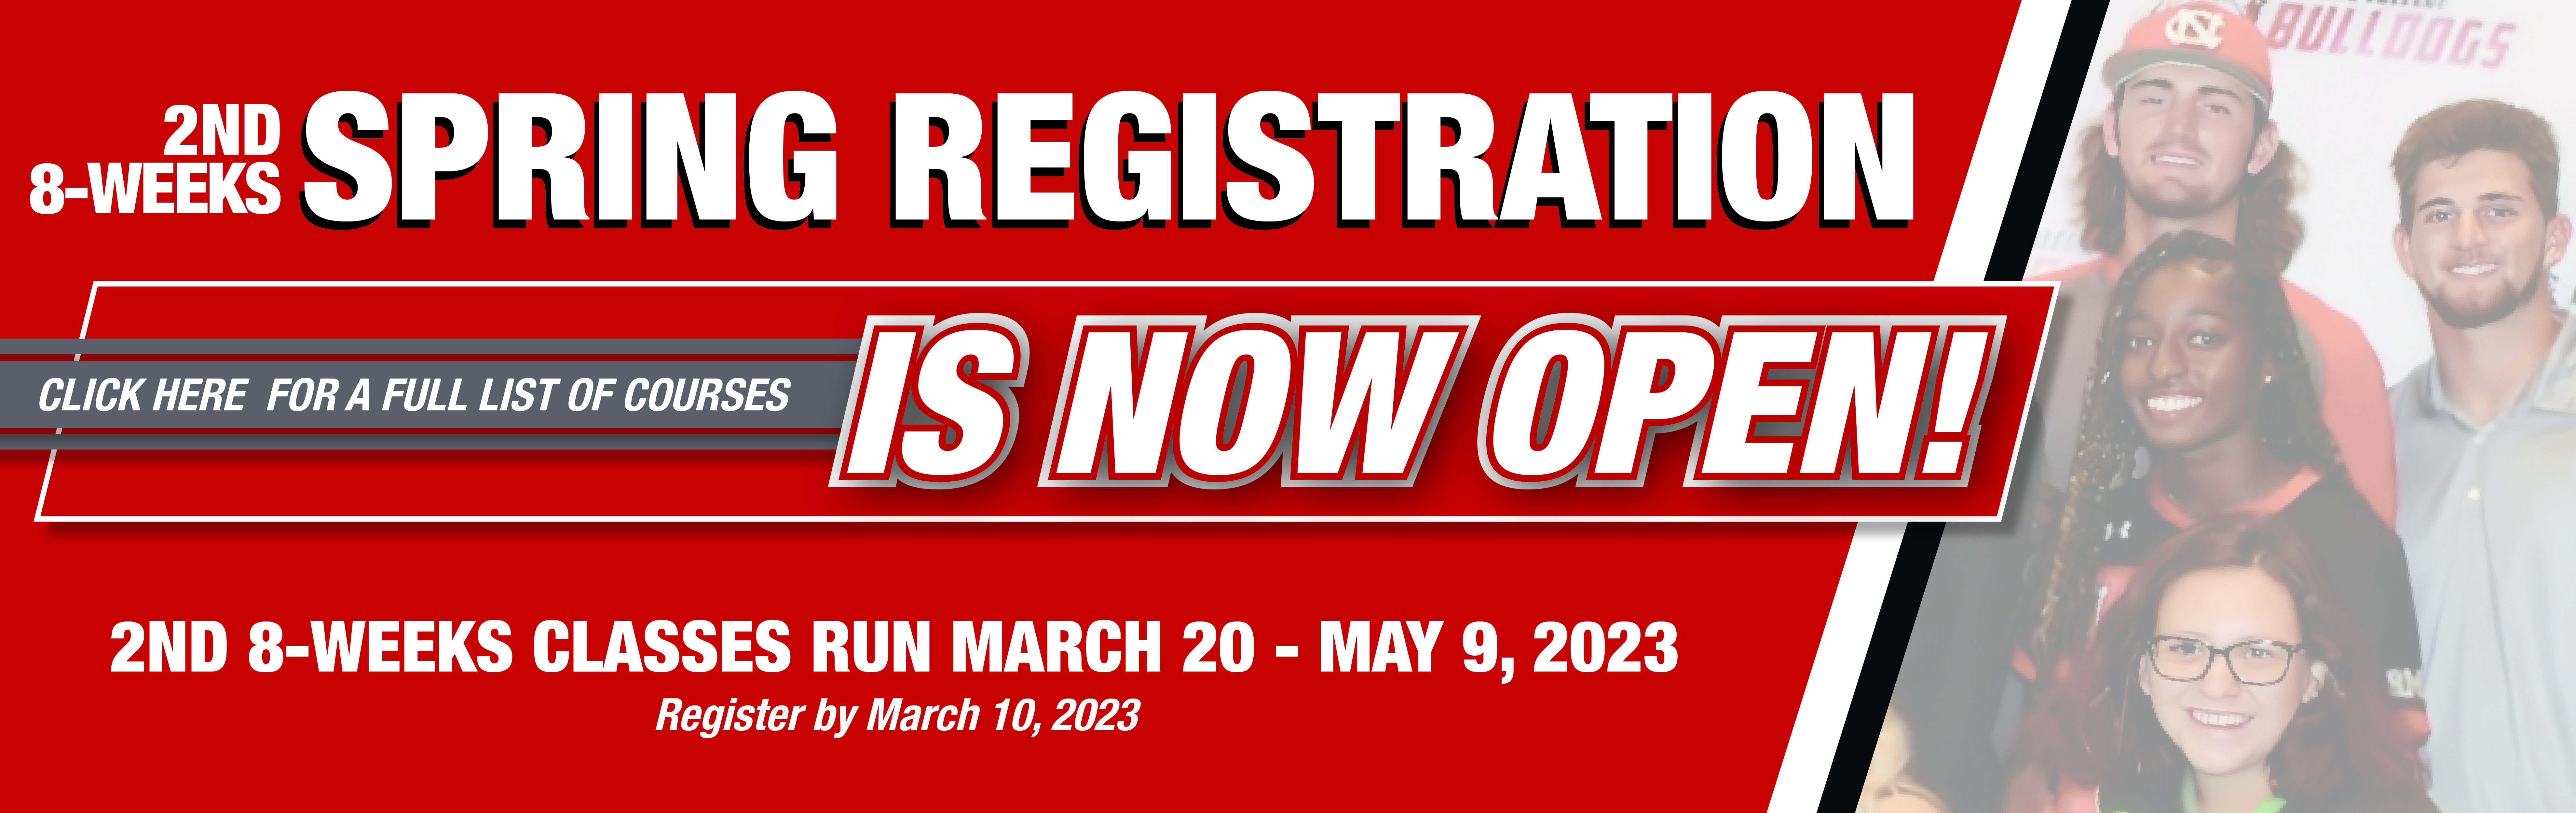 Spring 2023 2nd 8-Week Registration